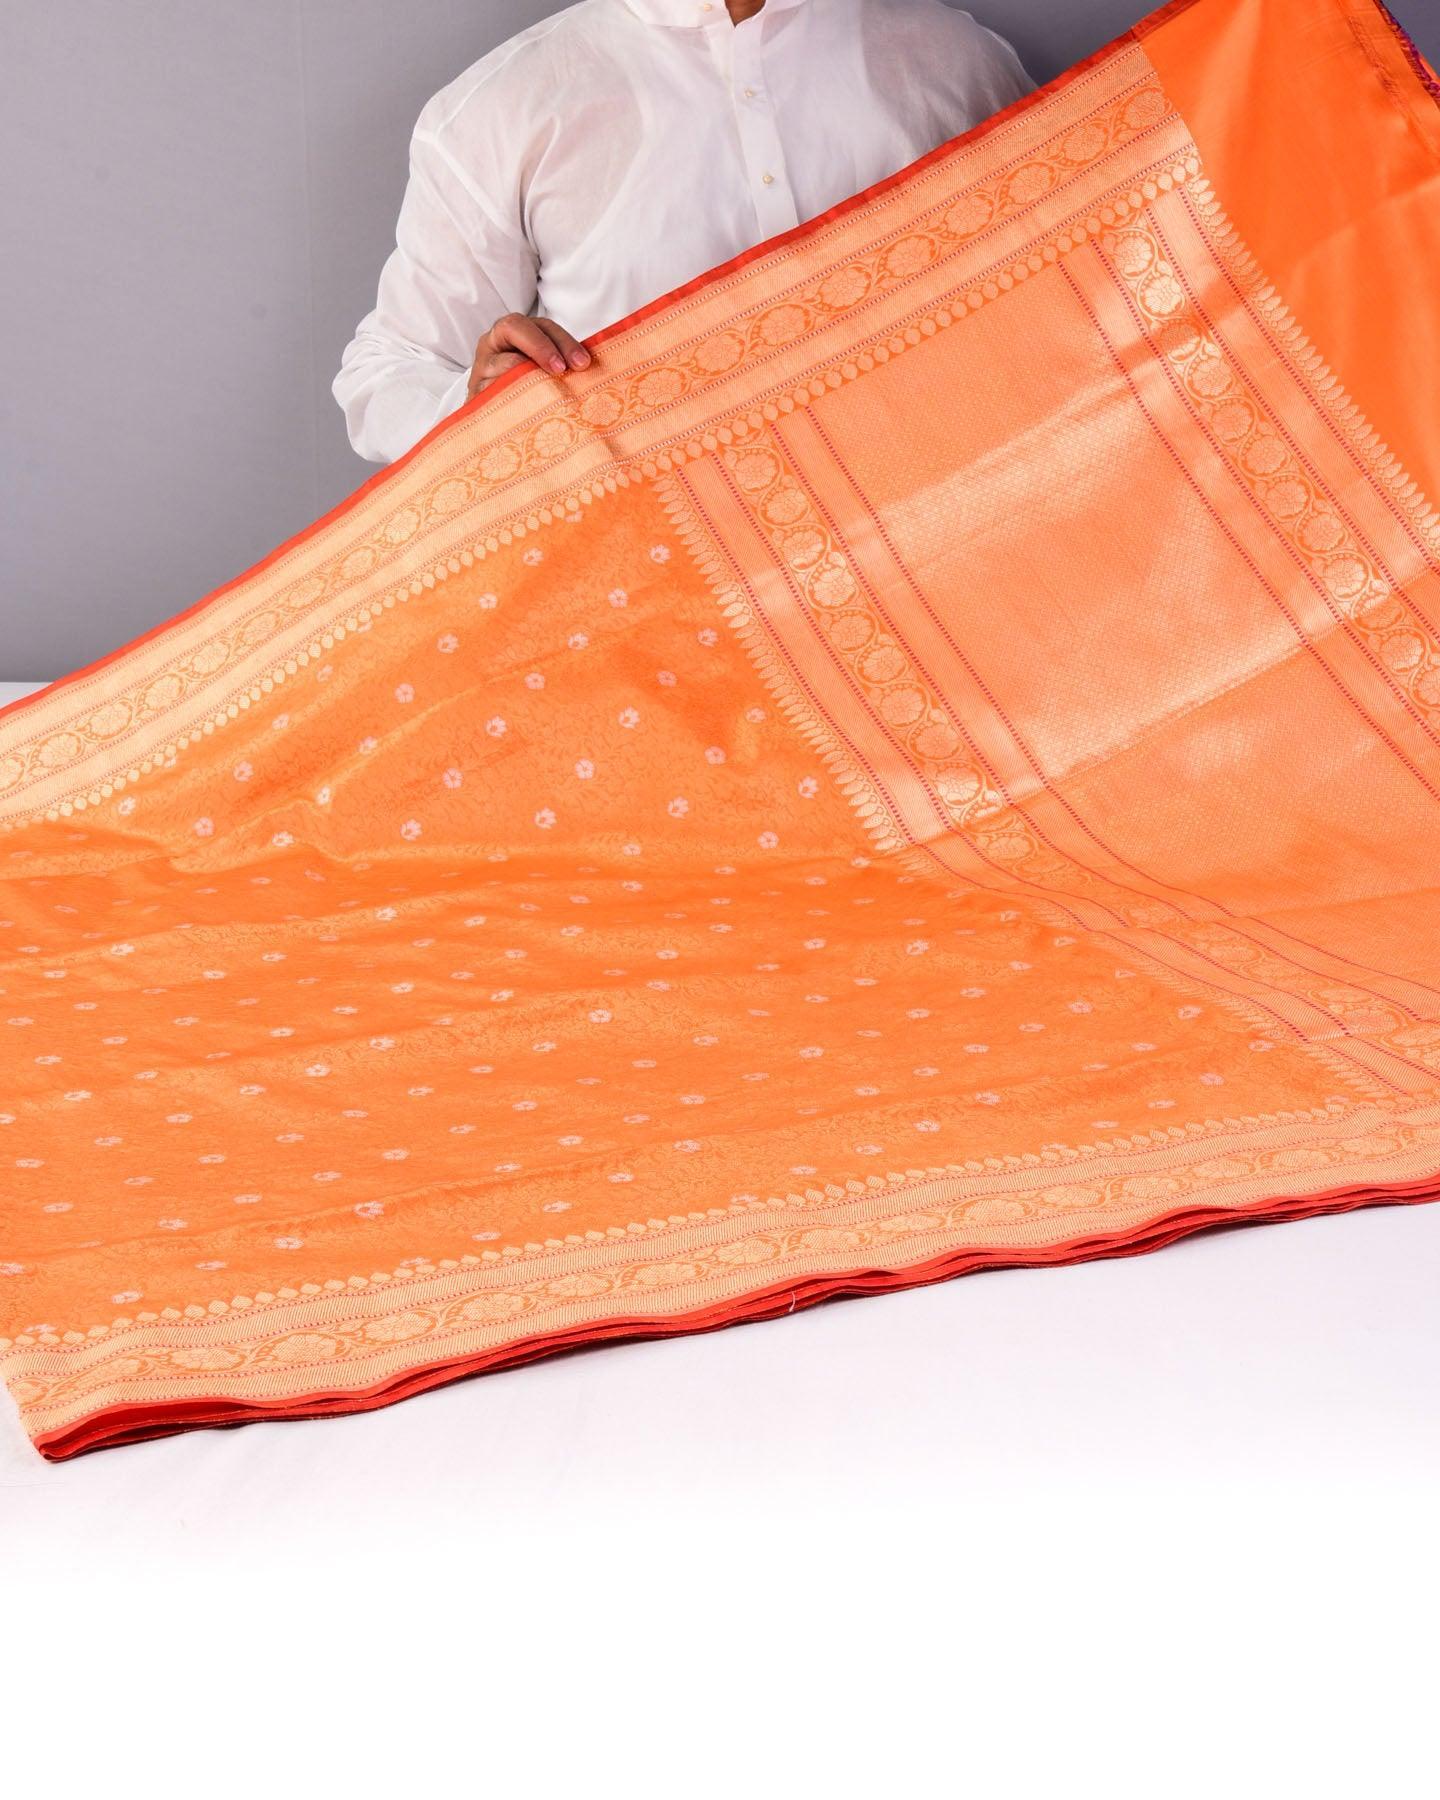 Orange Alfi Sona Rupa Jaal Cutwork Banarasi Brocade Handwoven Katan Silk Saree - By HolyWeaves, Benares